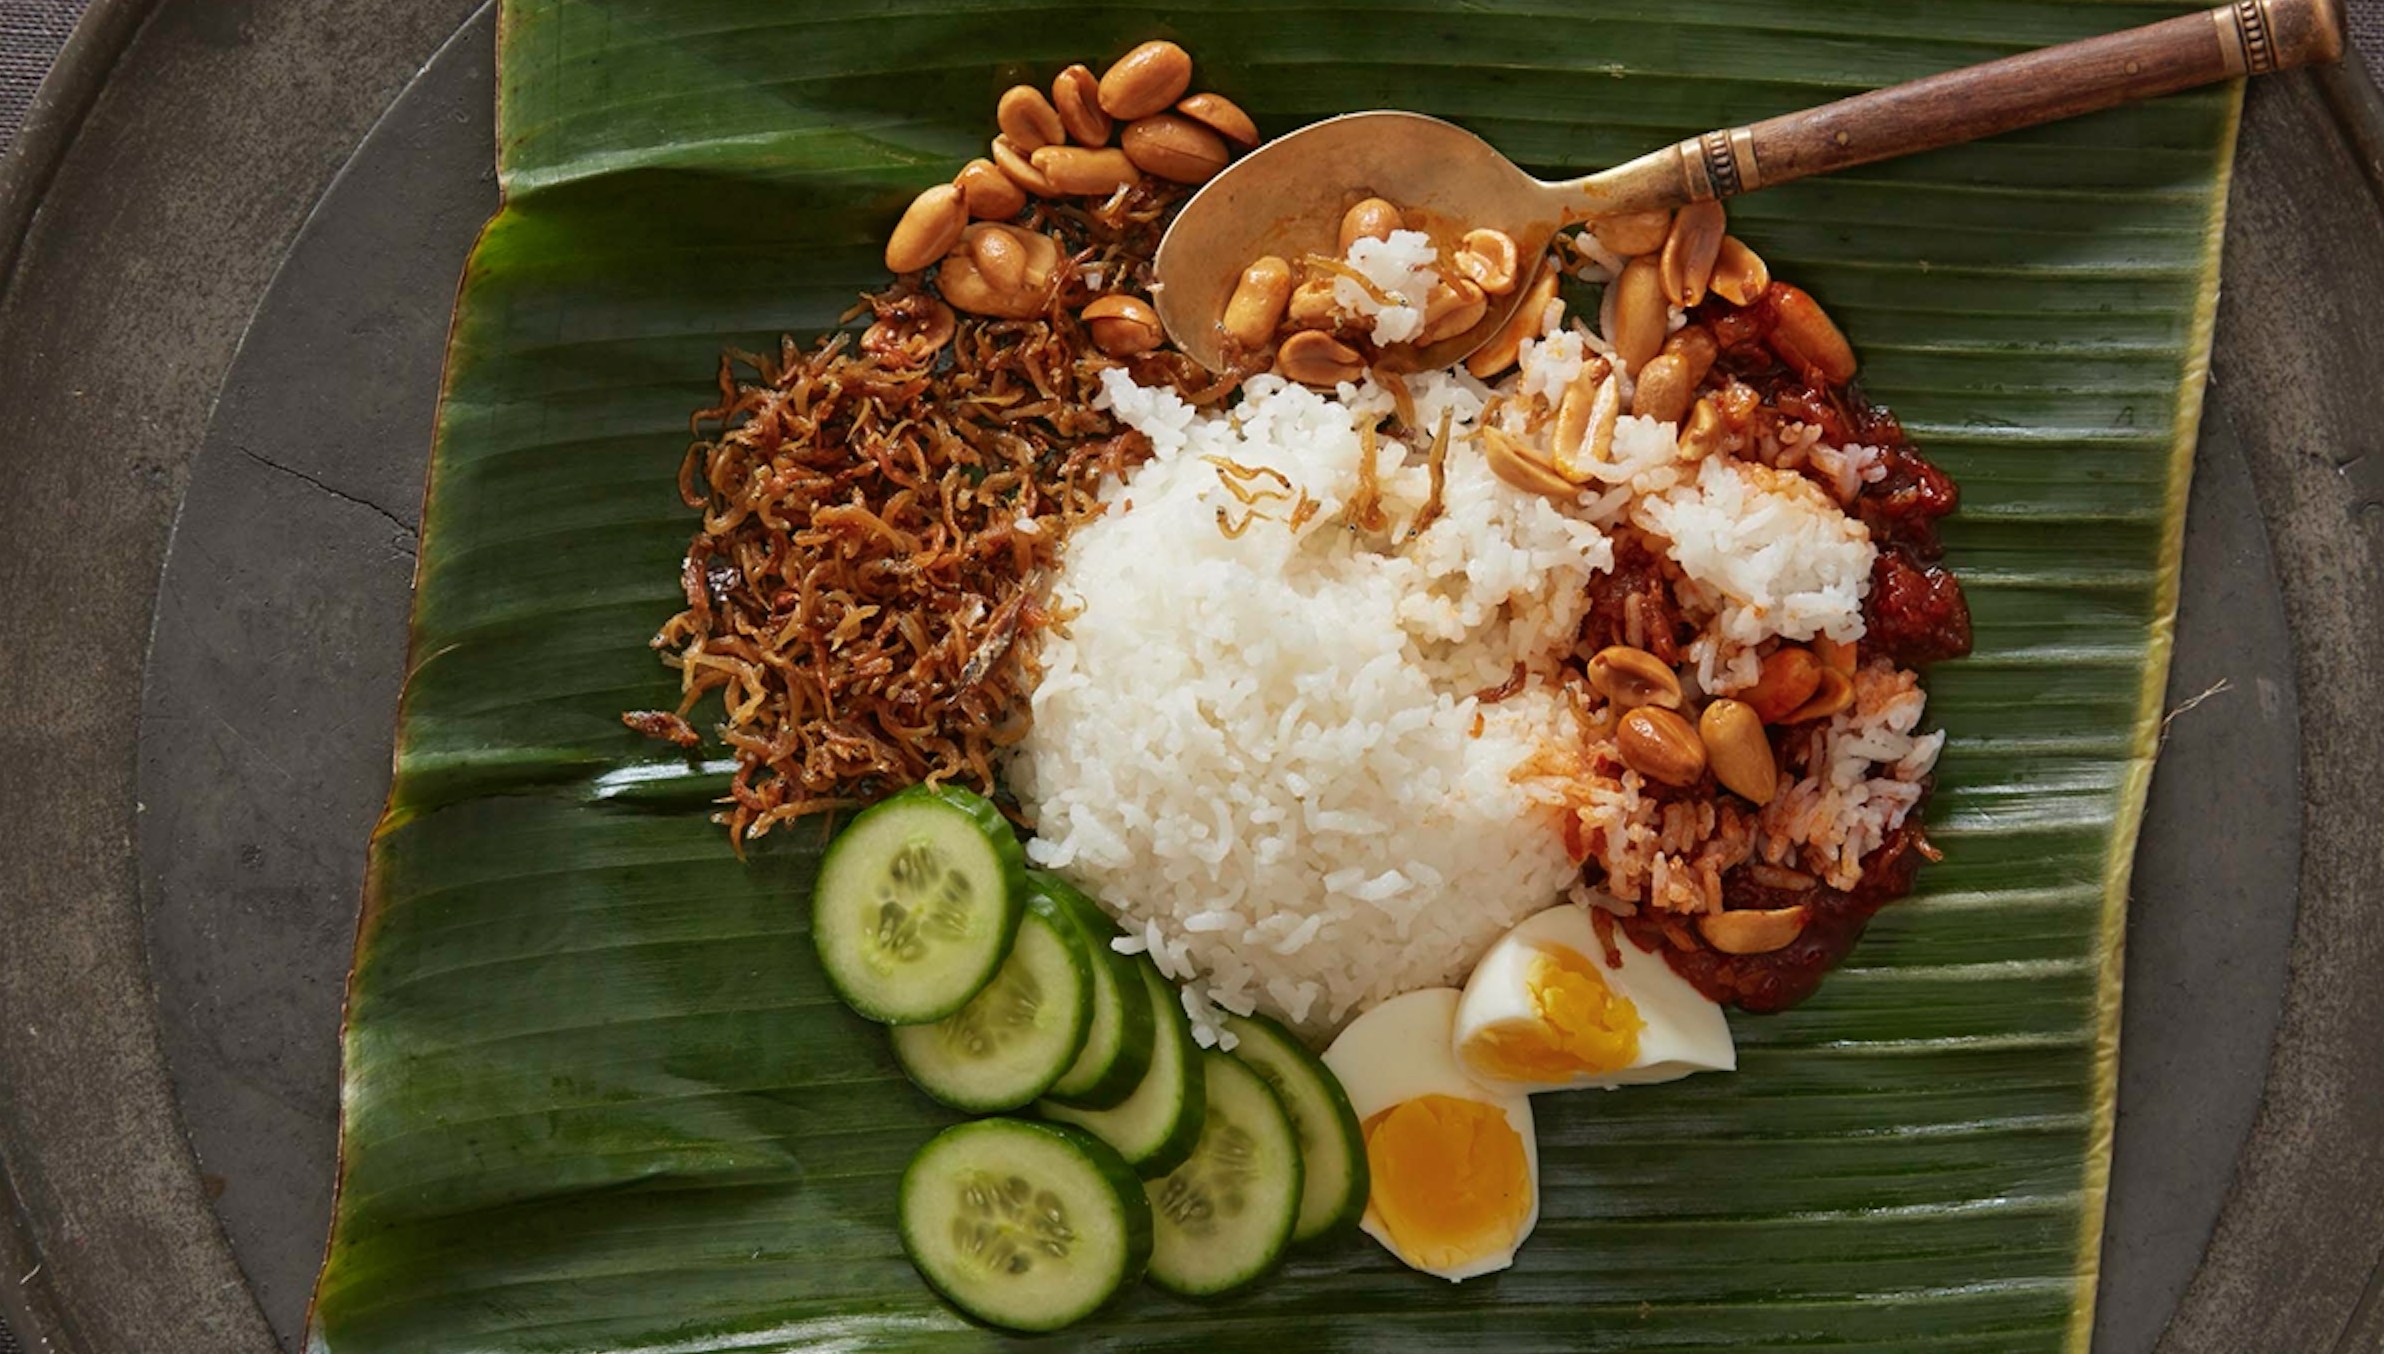 essay malaysian food